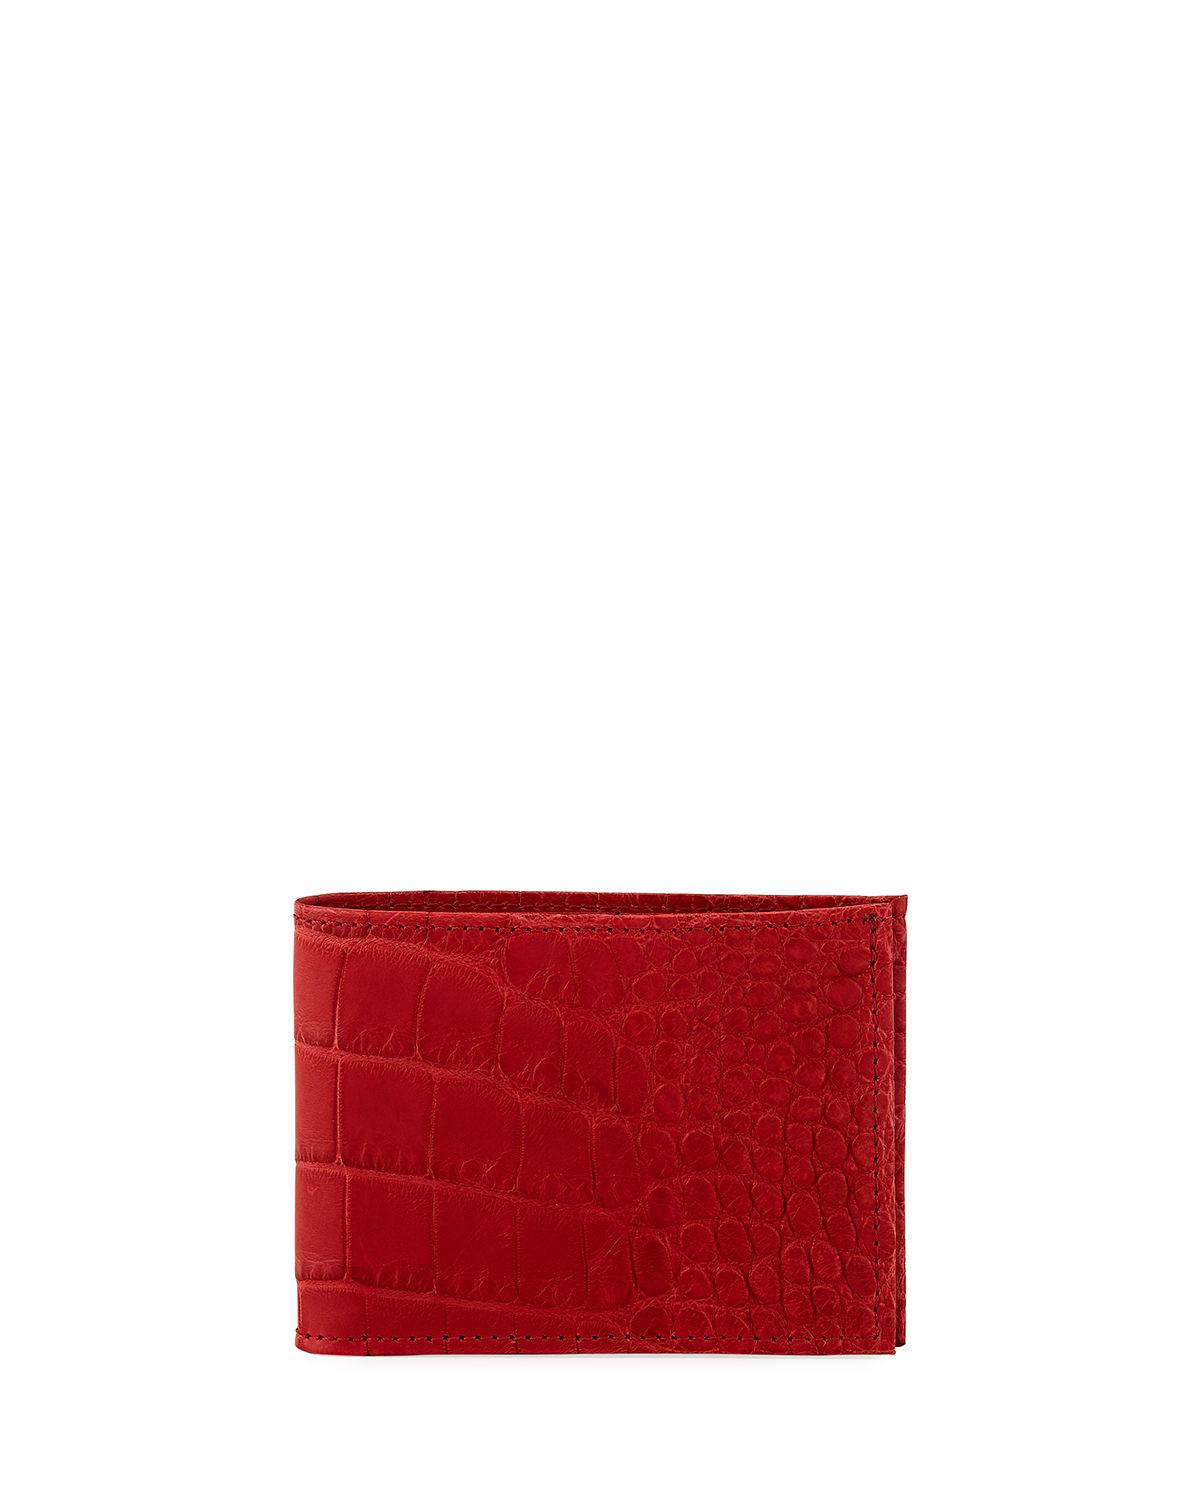 Neiman Marcus Alligator Bi-fold Wallet in Red for Men - Lyst